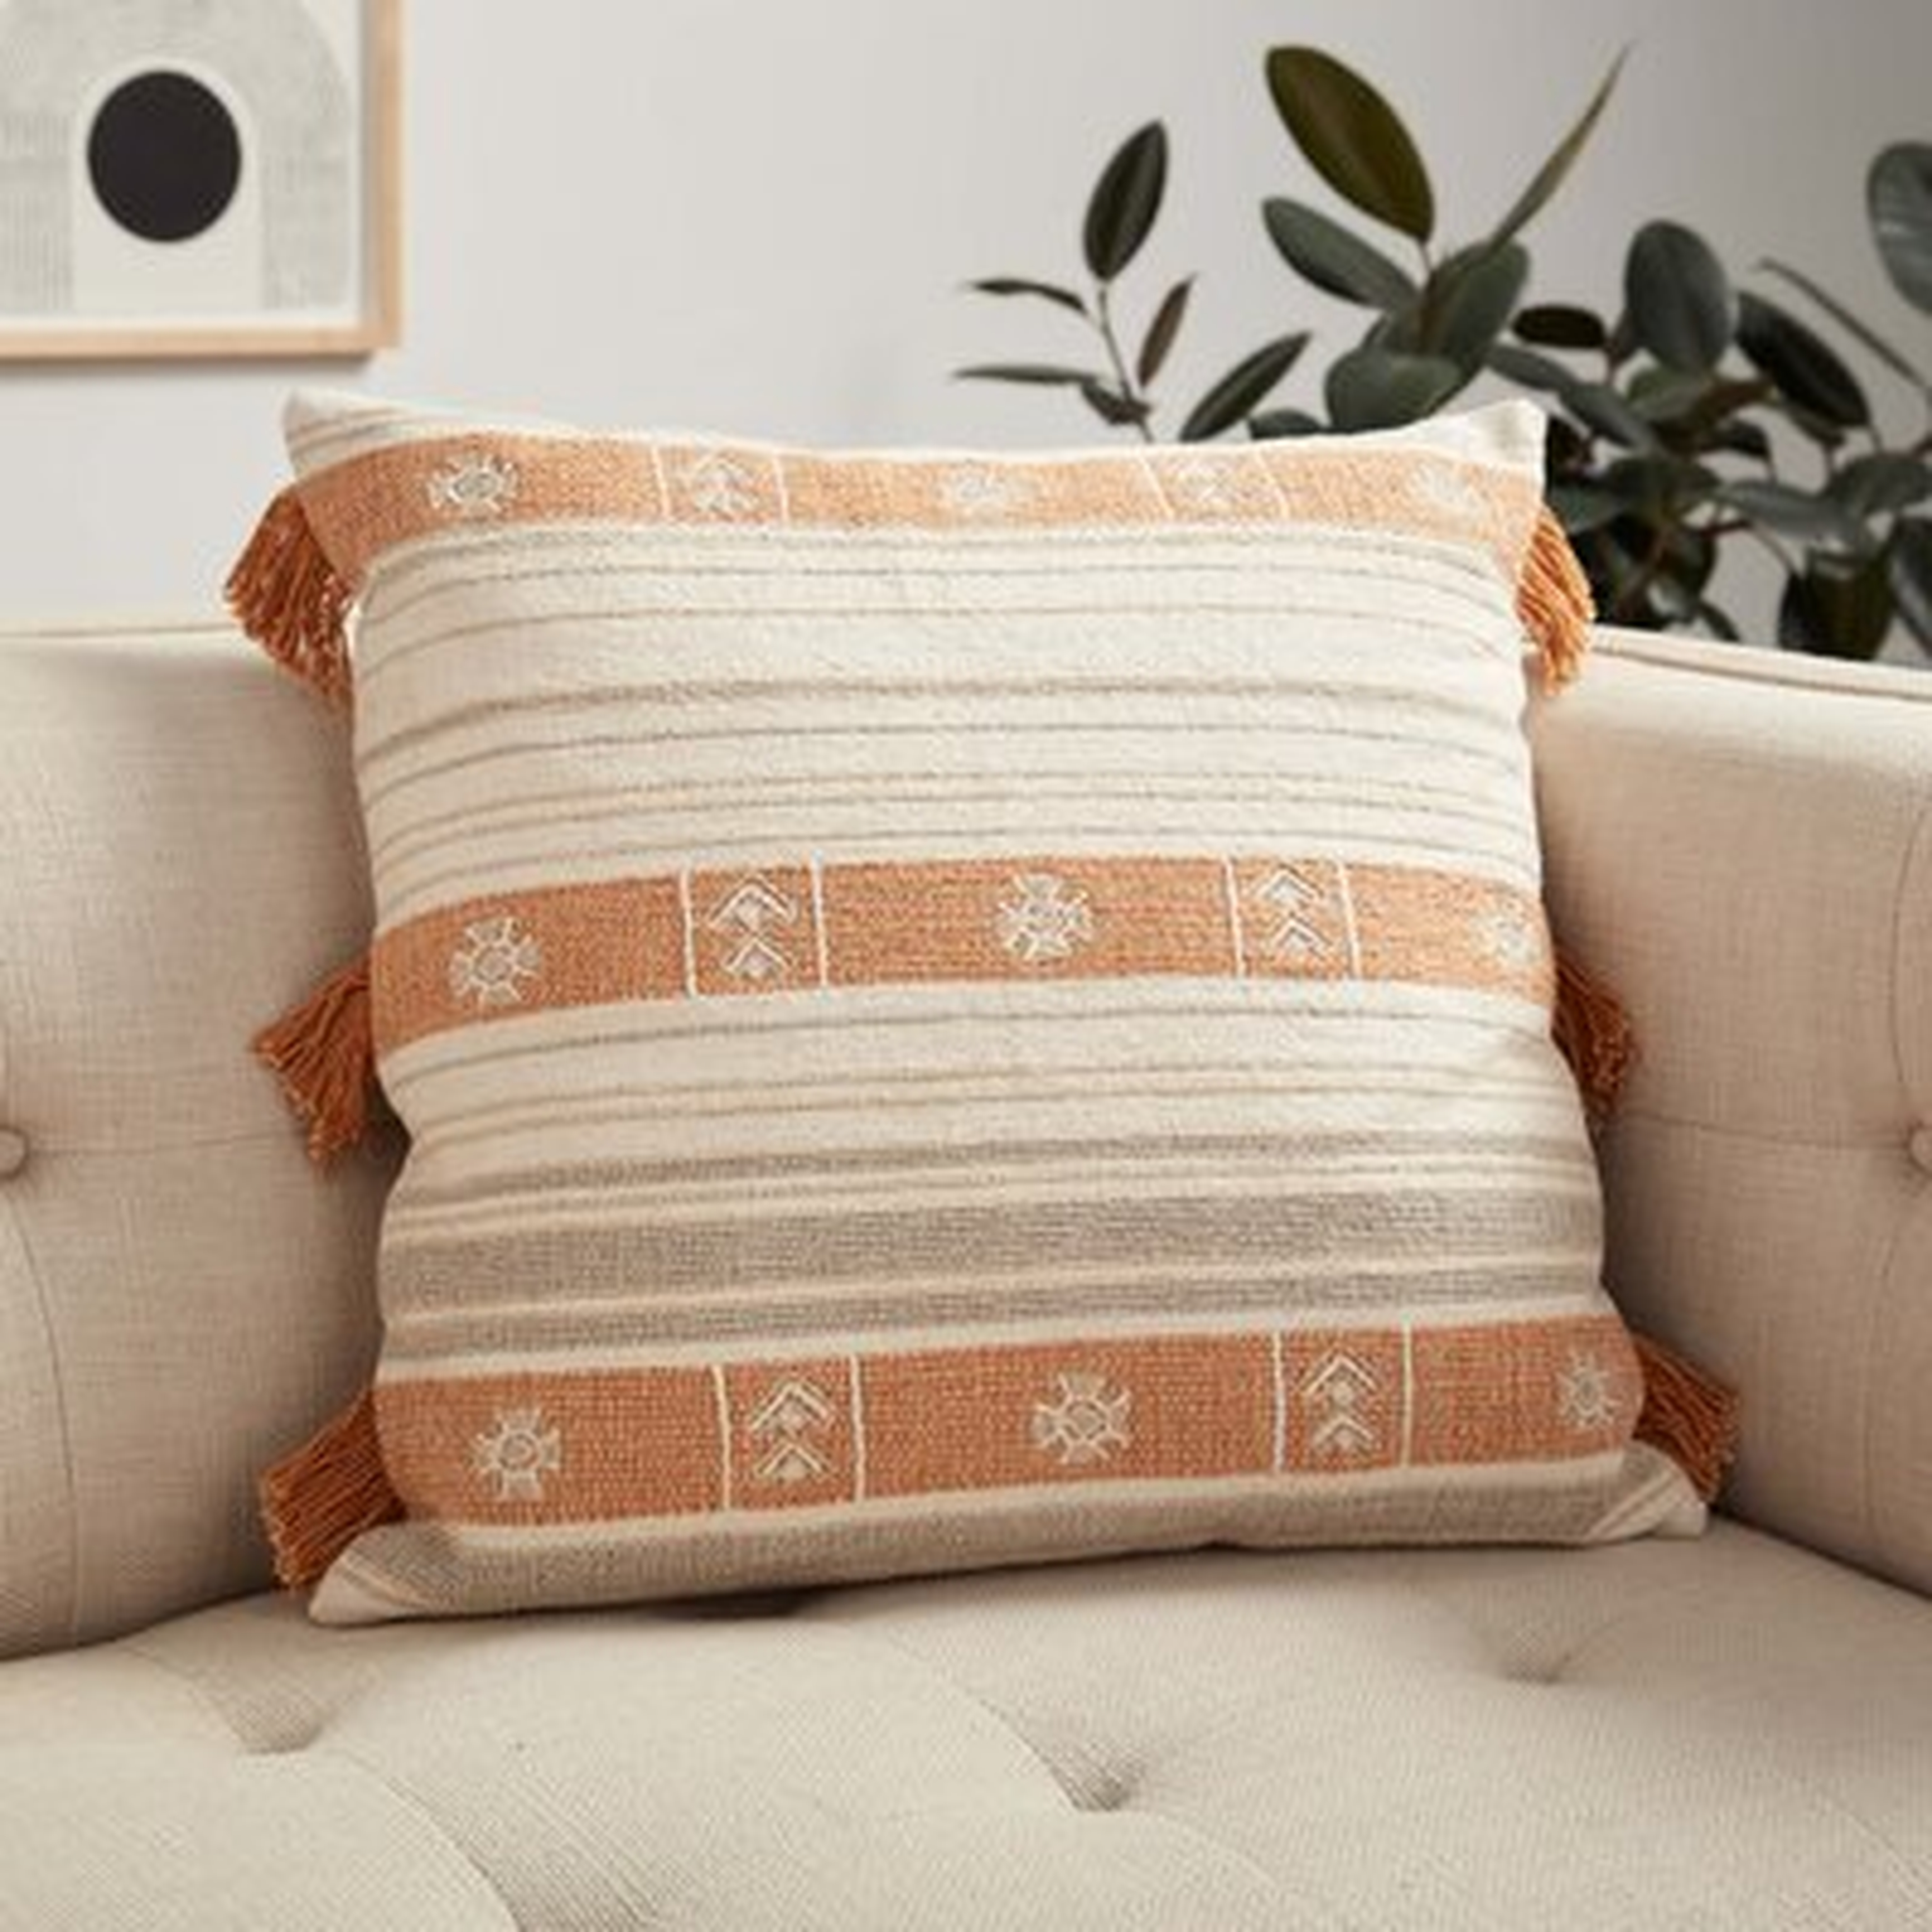 Decorative Square Pillow Cover - Wayfair